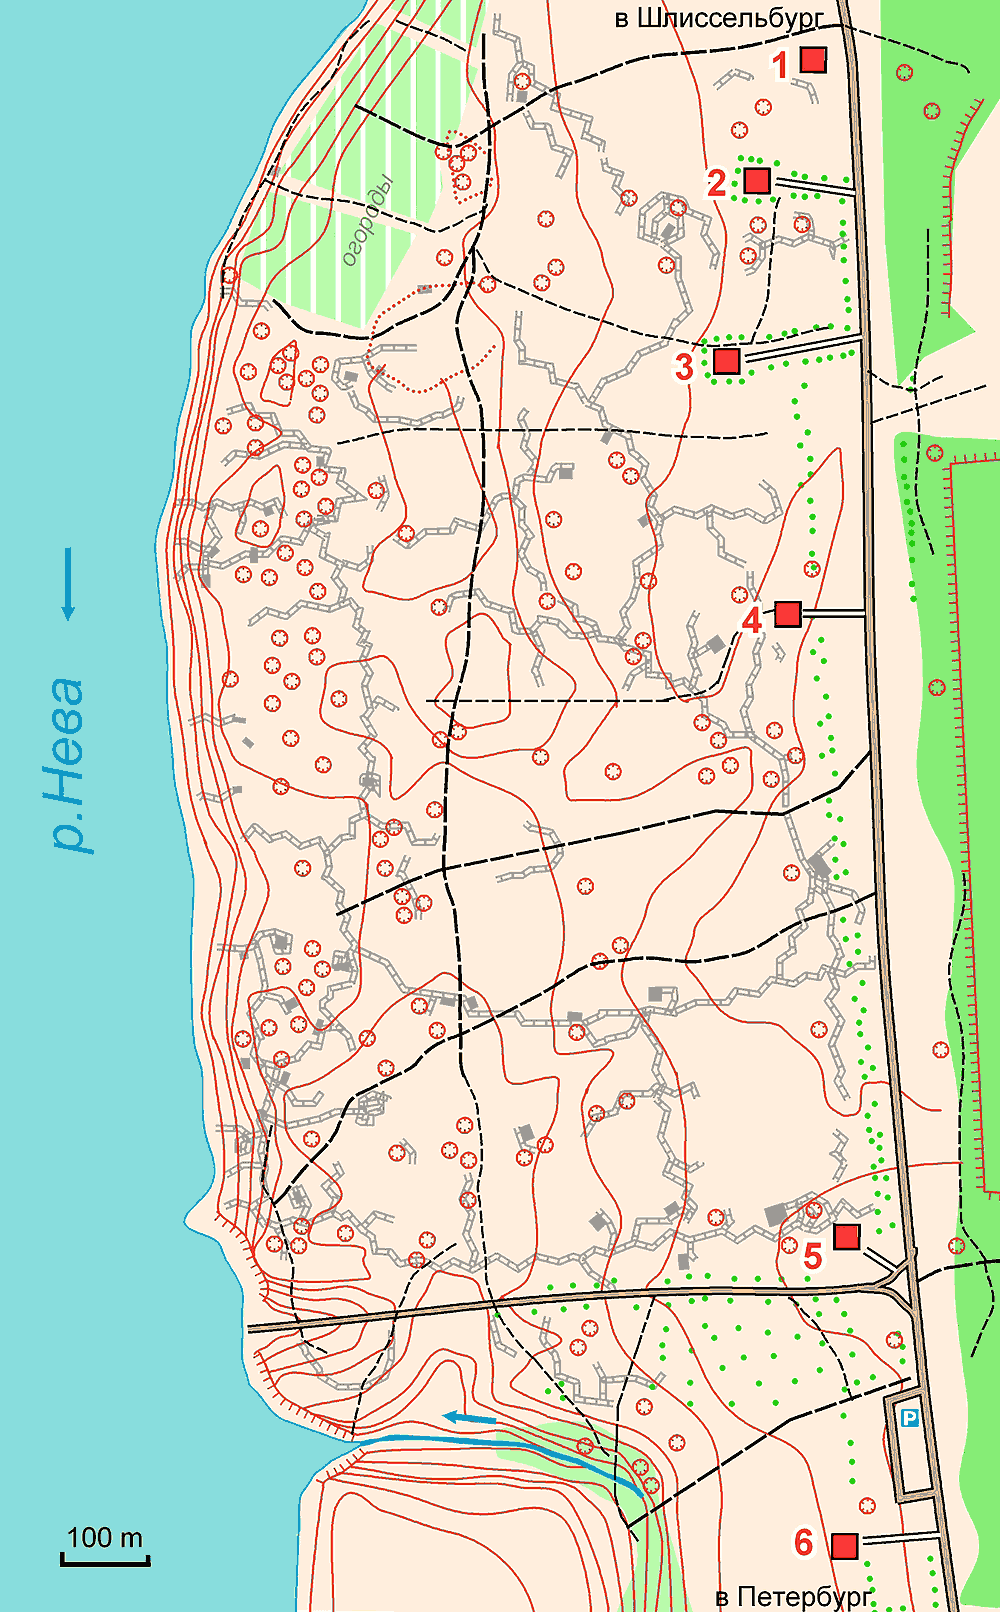 Plan of Nevskij Pjatachok (Neva's Bridg-Head)